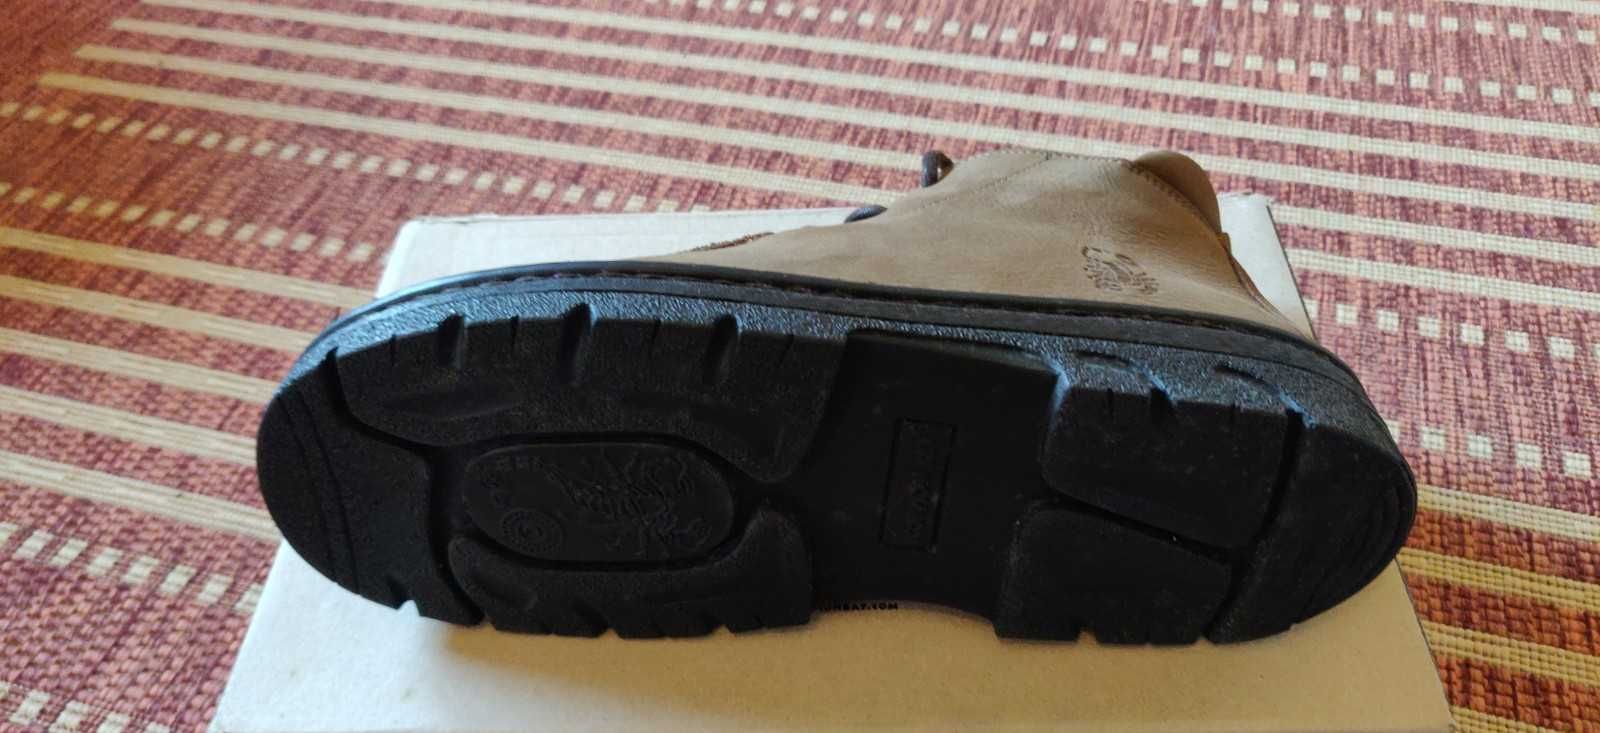 Sapatos Castanhos Scorpion Bay tamanho 43 - Estilo Surf / Body board